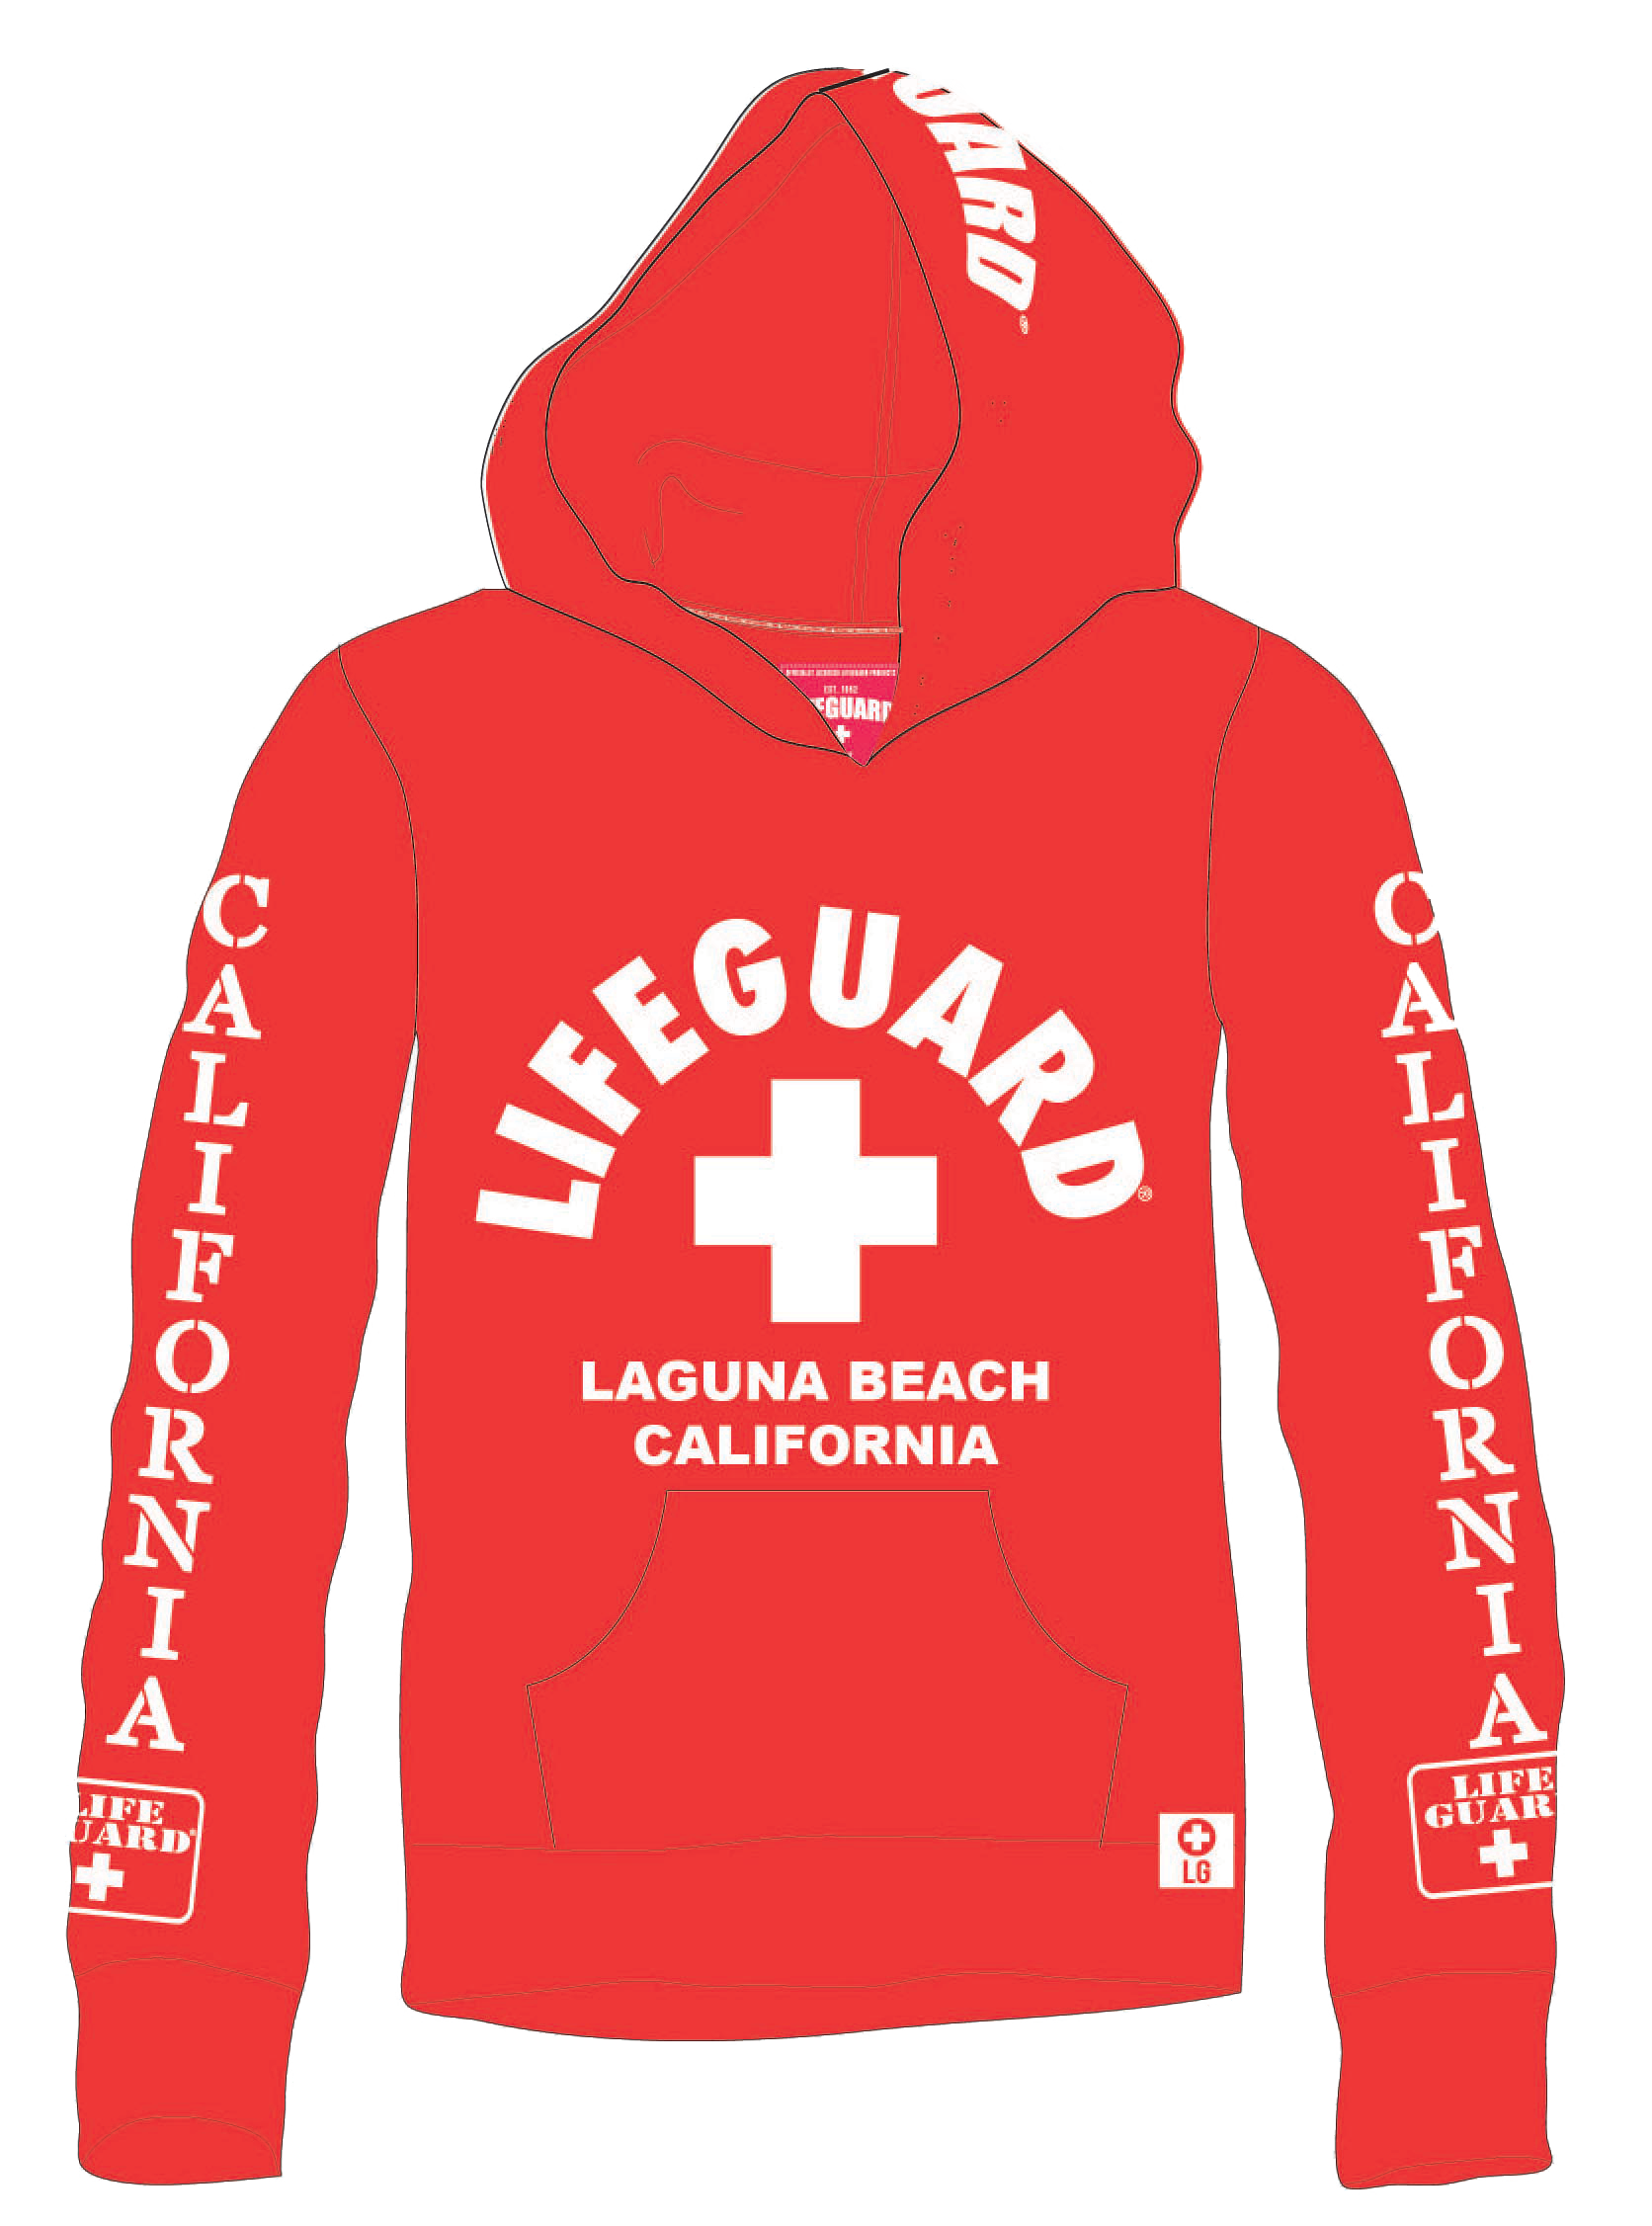 Lifeguard Unisex Adult Sweatshirt - Red